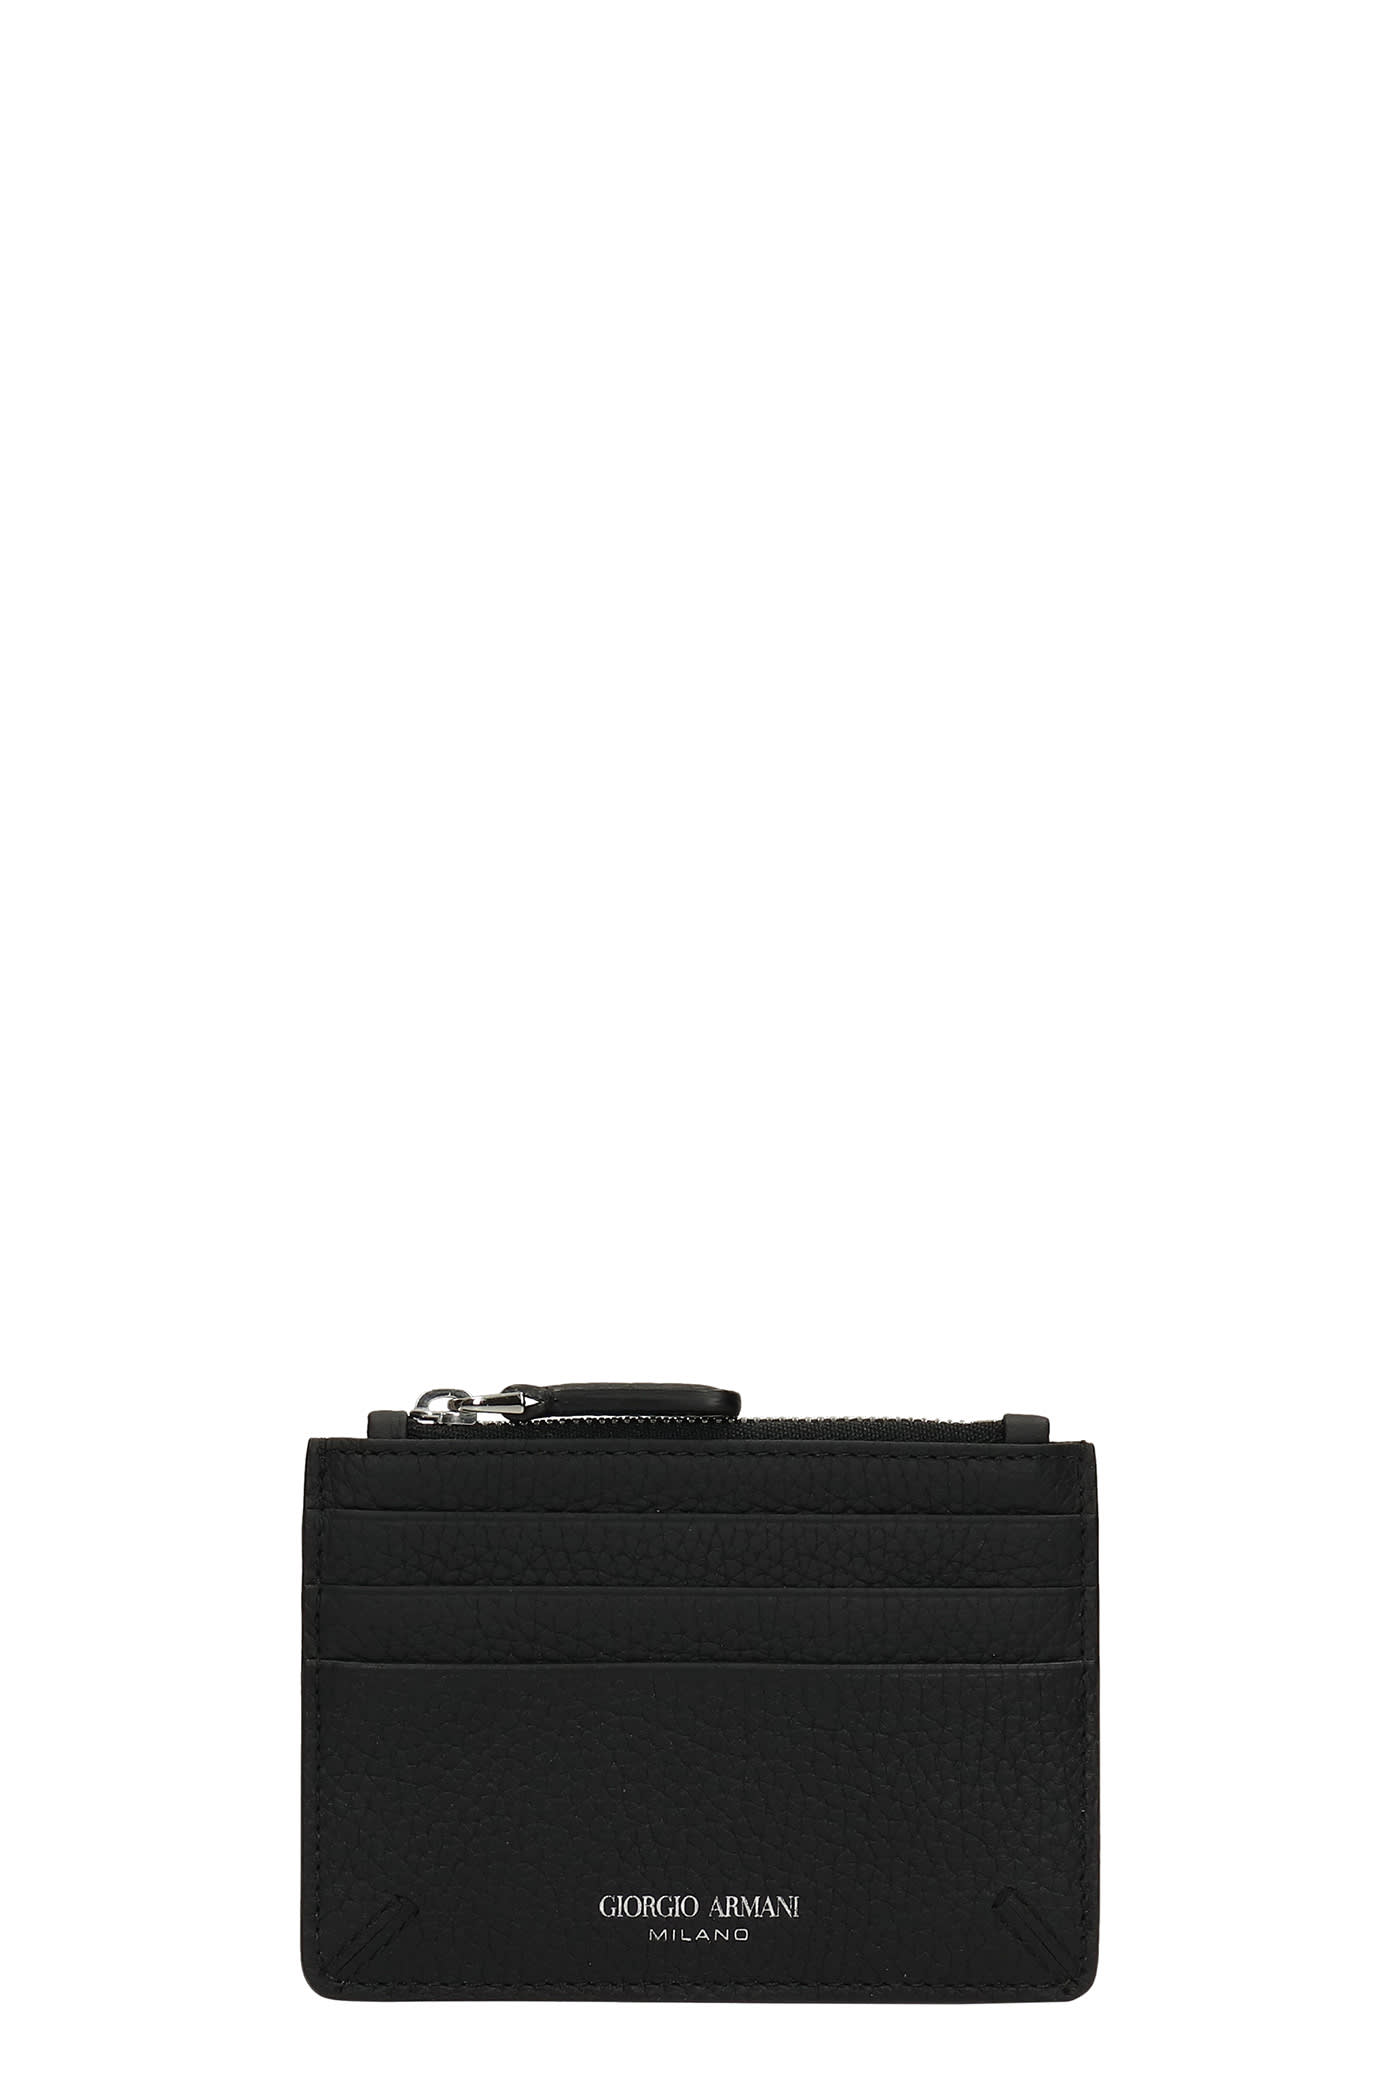 Giorgio Armani Cc Holder Zip Wallet In Black Leather